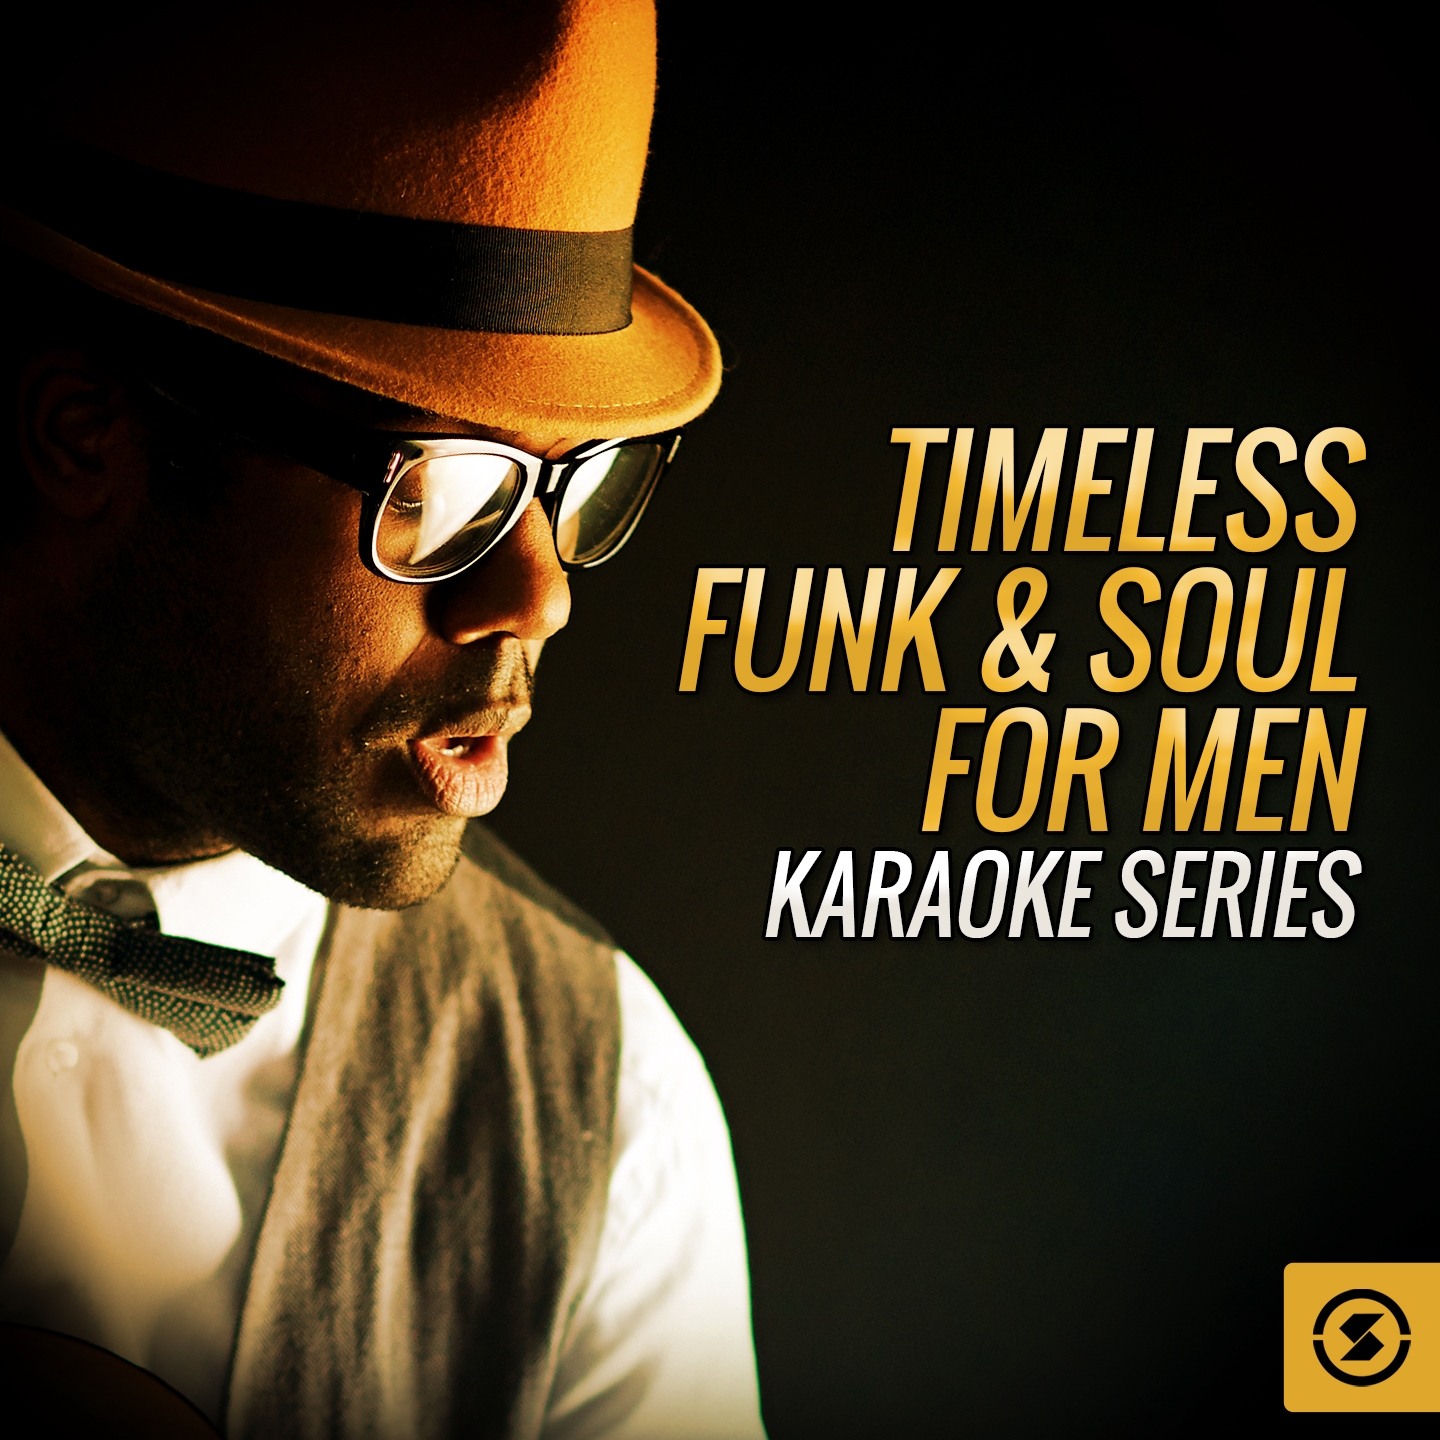 Timeless Funk & Soul for Men Karaoke Series